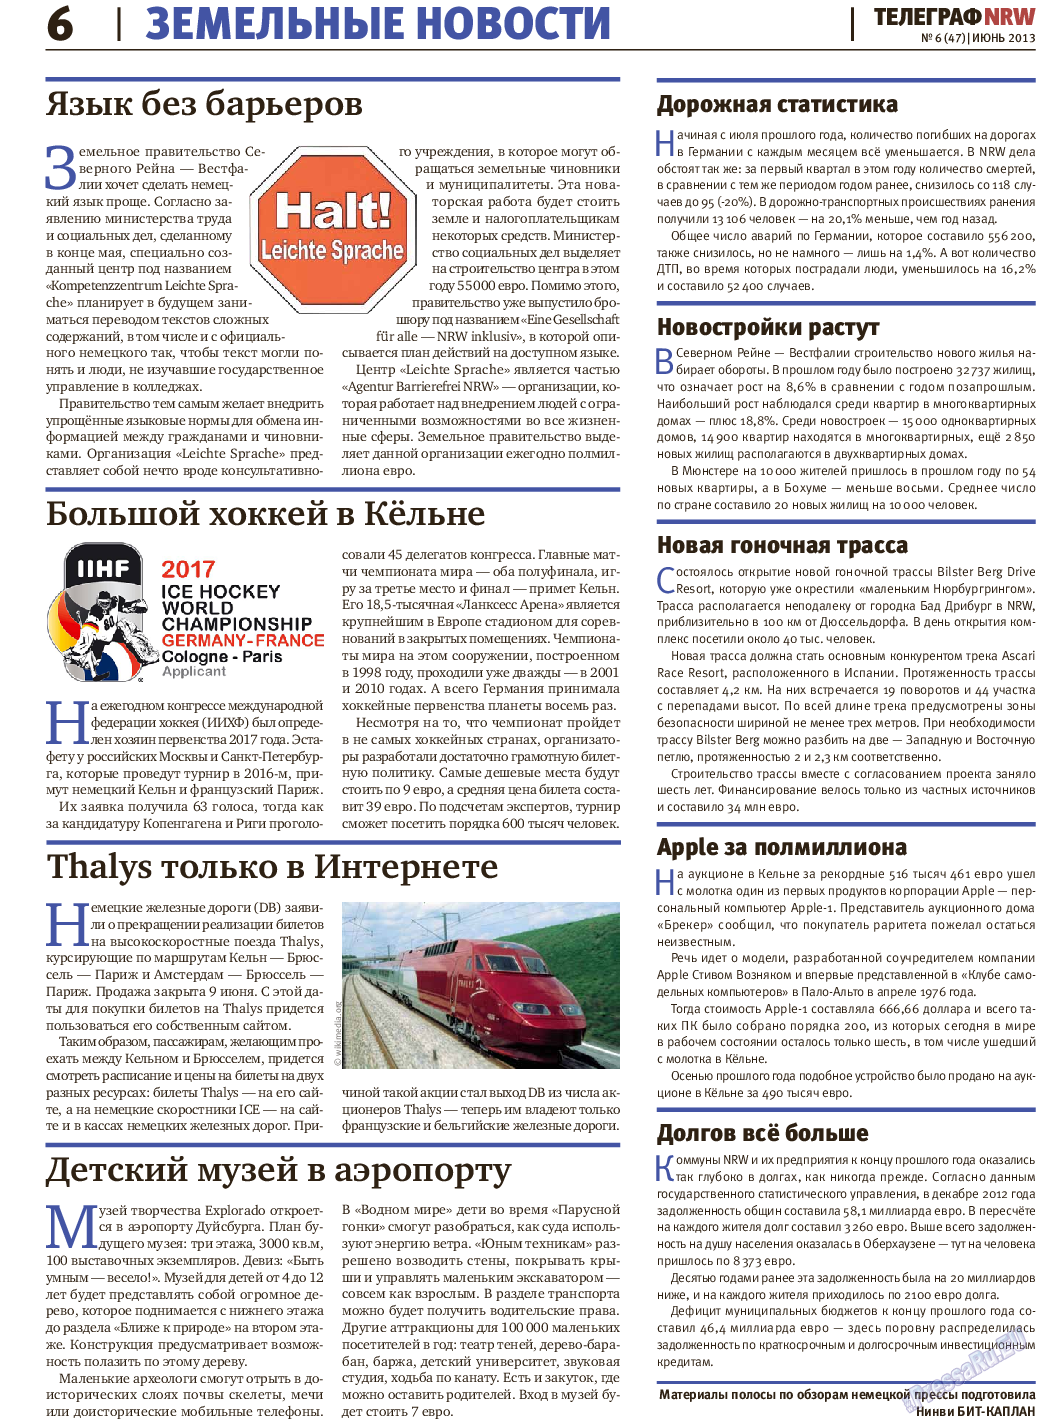 Телеграф NRW, газета. 2013 №6 стр.6